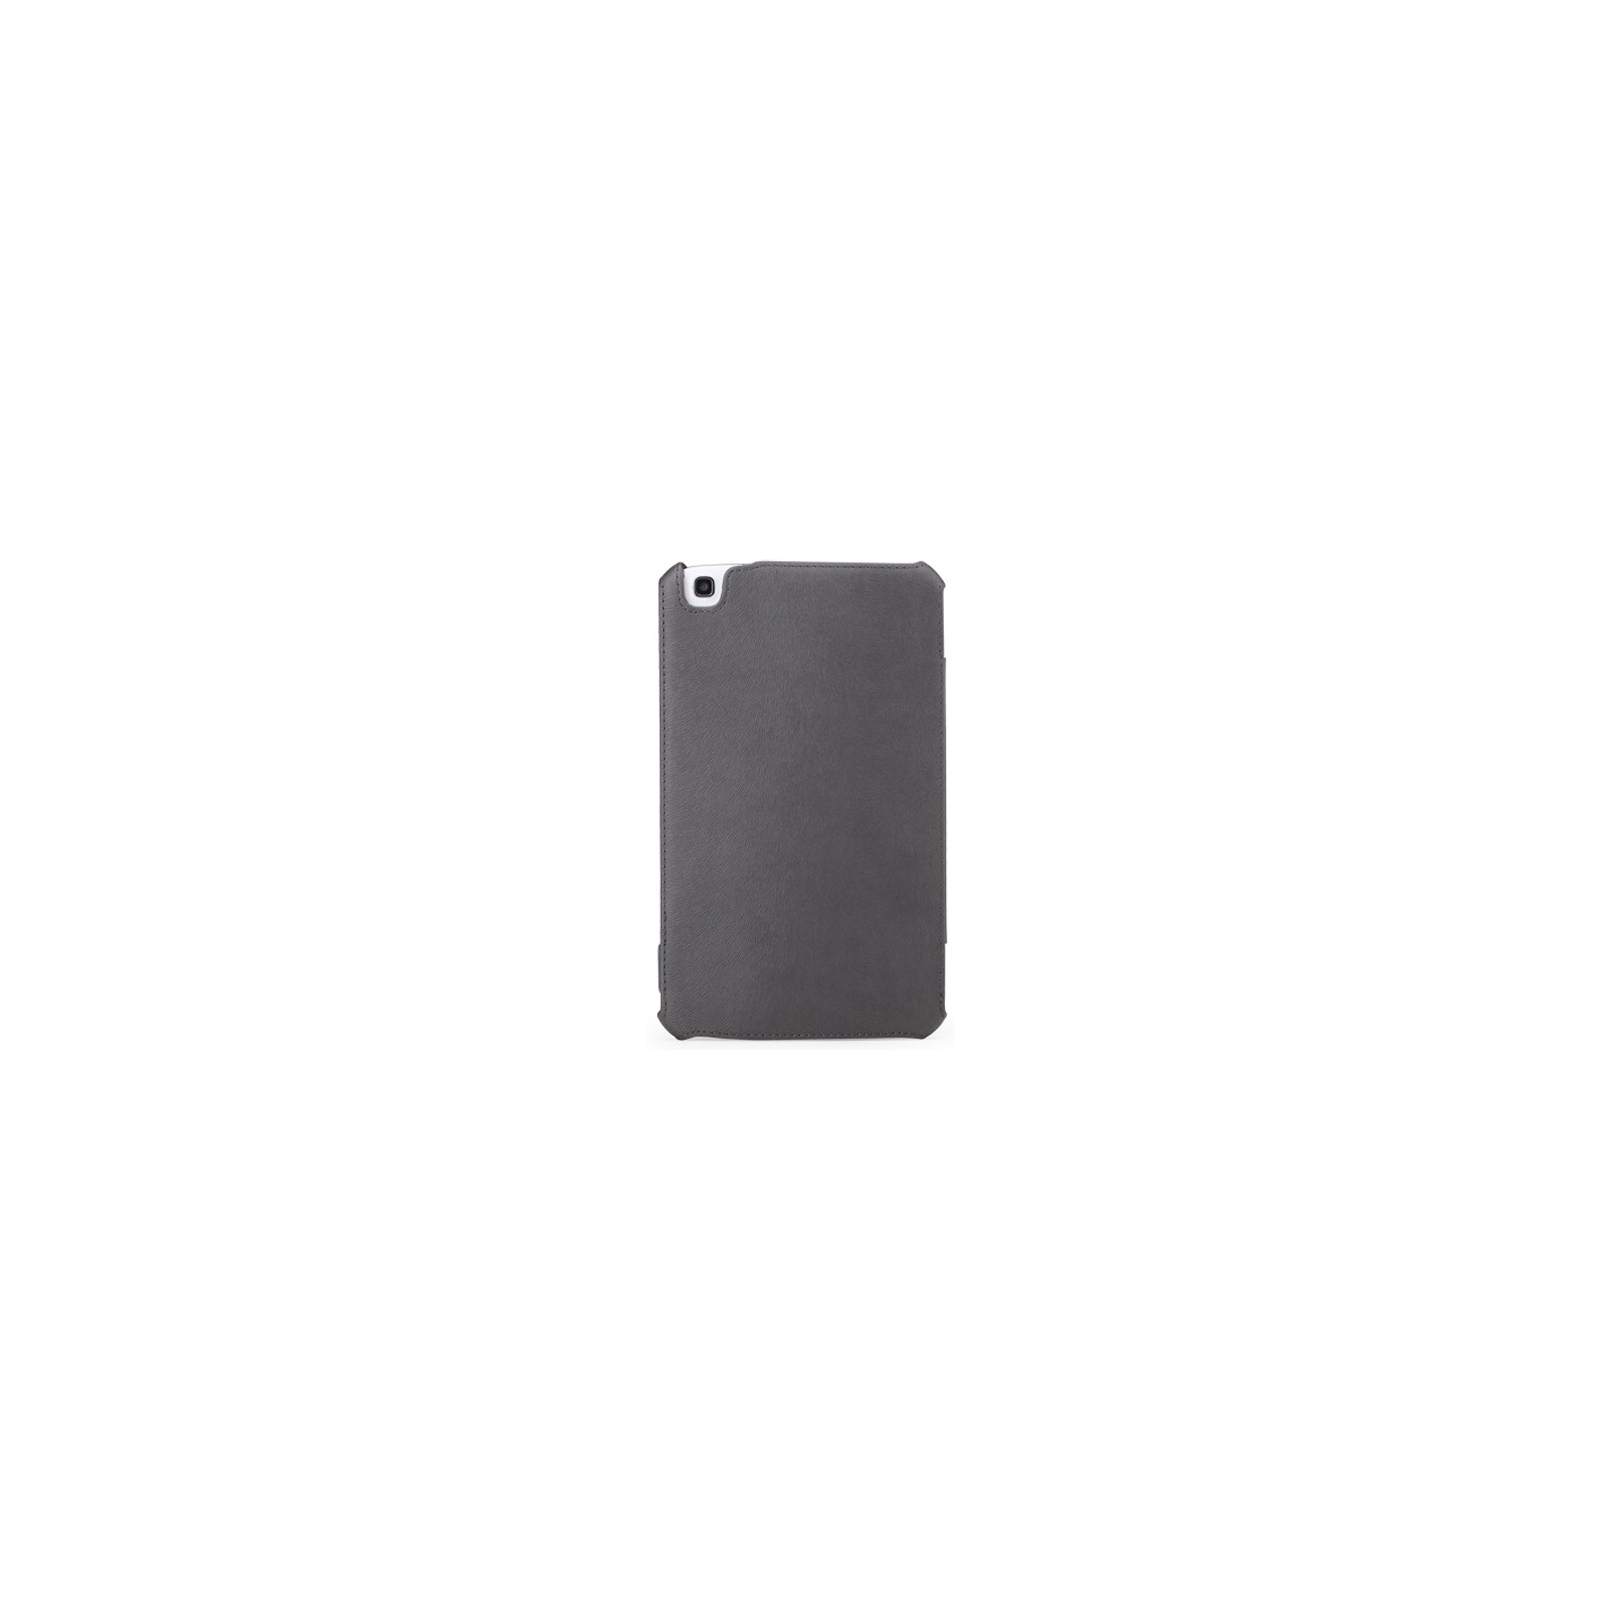 Чехол для планшета Rock Samsung Galaxy Tab3 8.0 T3100 Texture series dark grey (T3100-40018) изображение 2